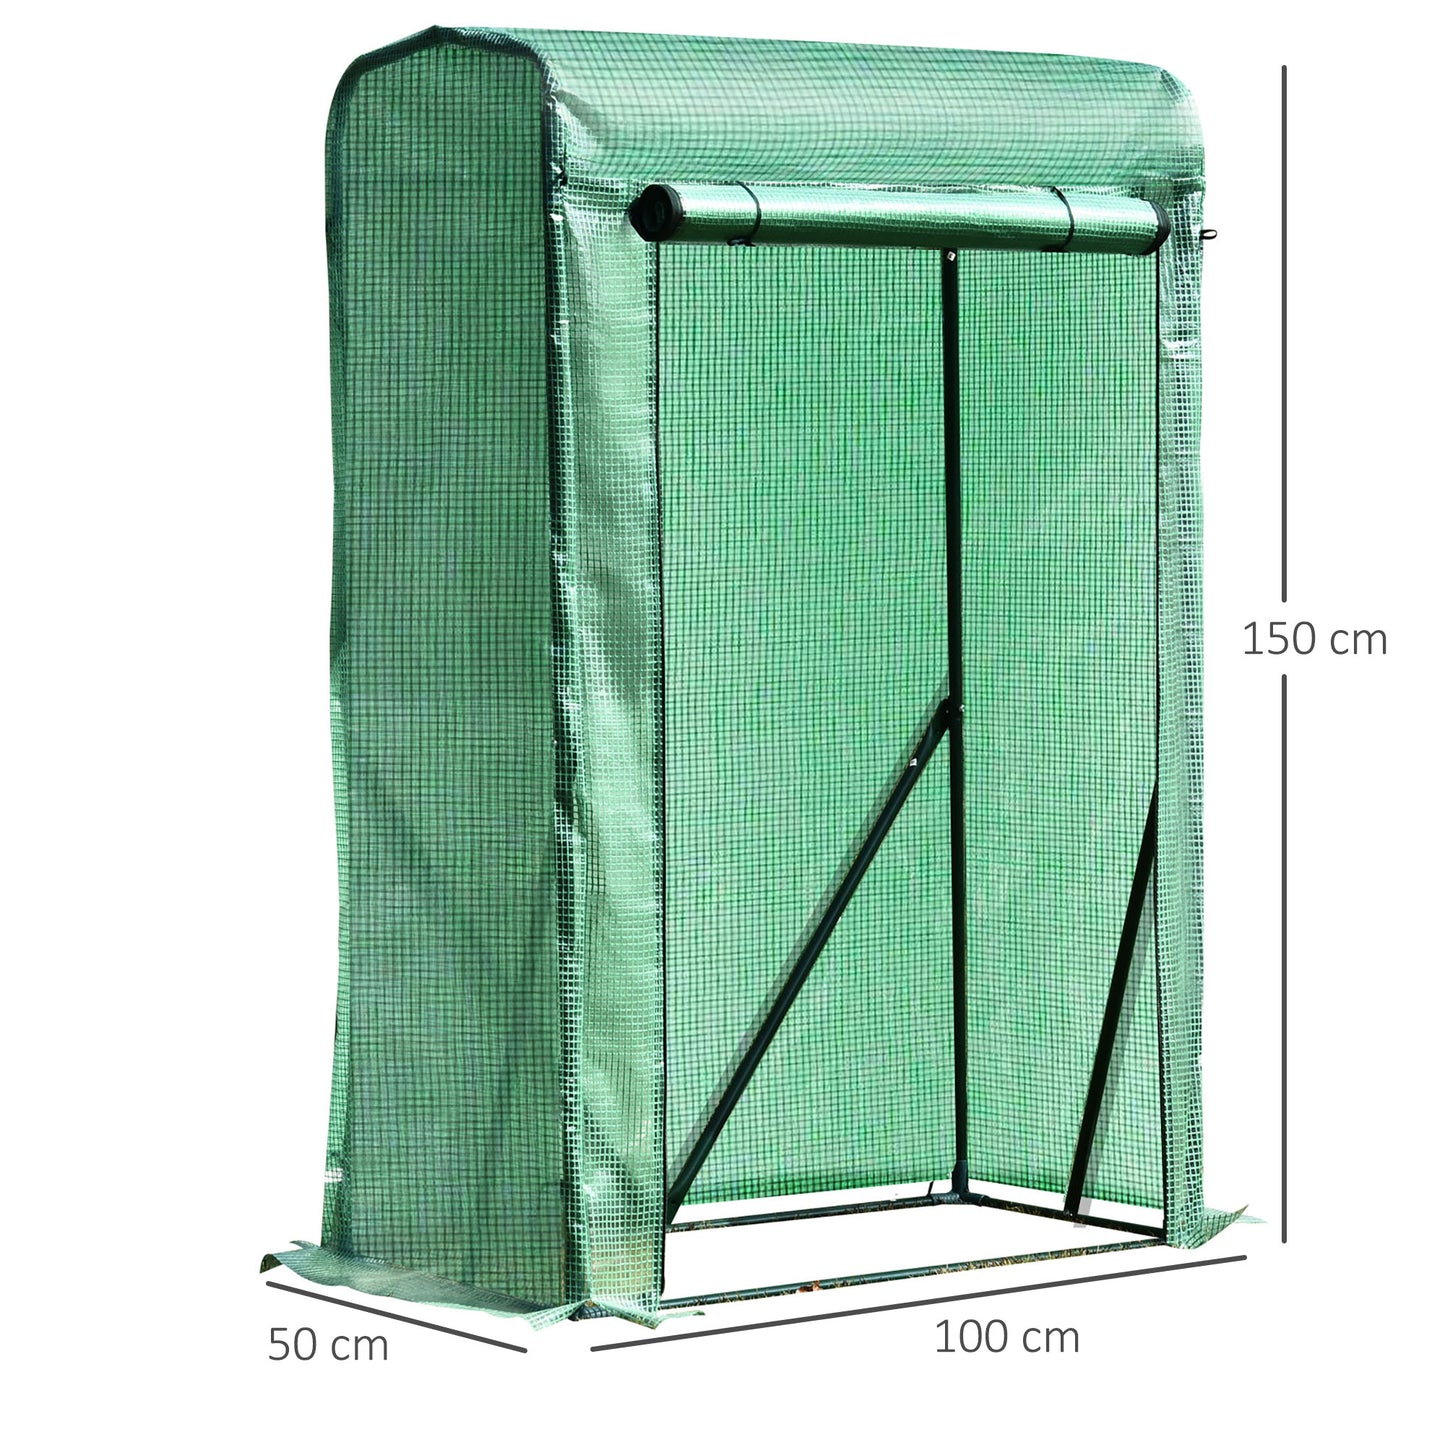 Outsunny Greenhouse Sanctuary: Zipper-Entry Plant Shelter for Verdant Nurturing, 100L x 50W x 150H cm, Emerald Green